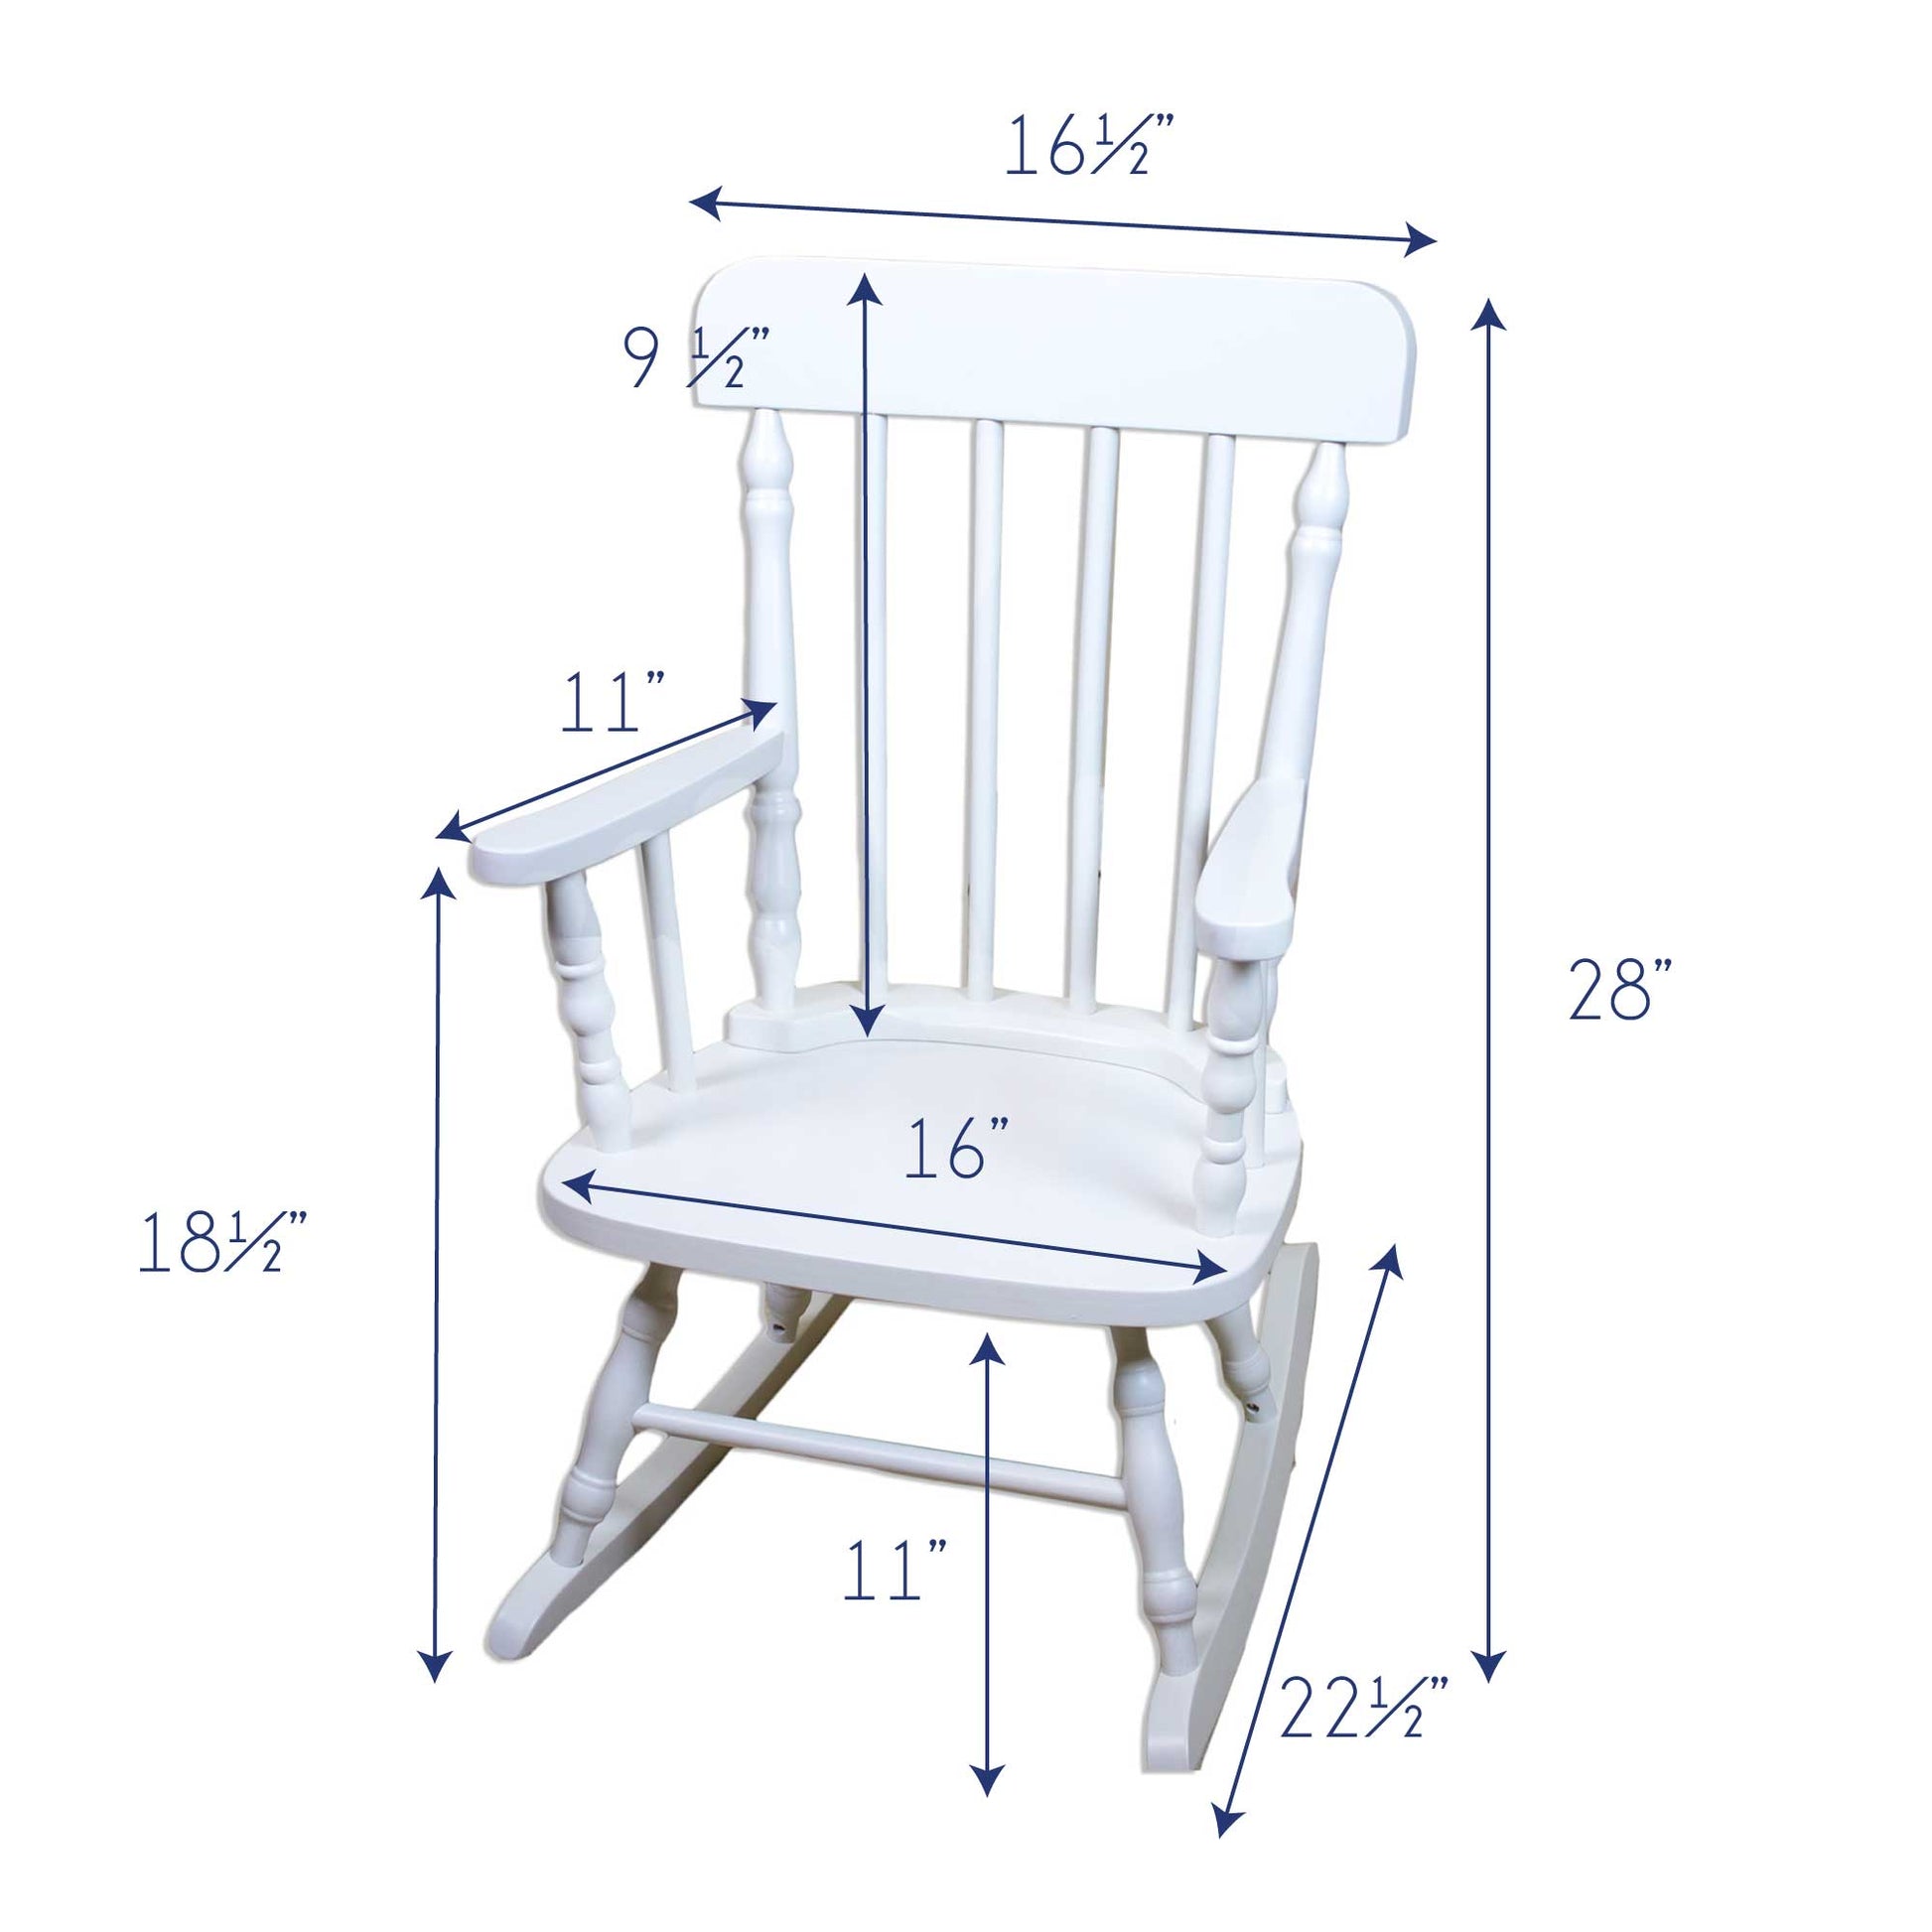 Unicorn White Personalized Wooden ,rocking chairs